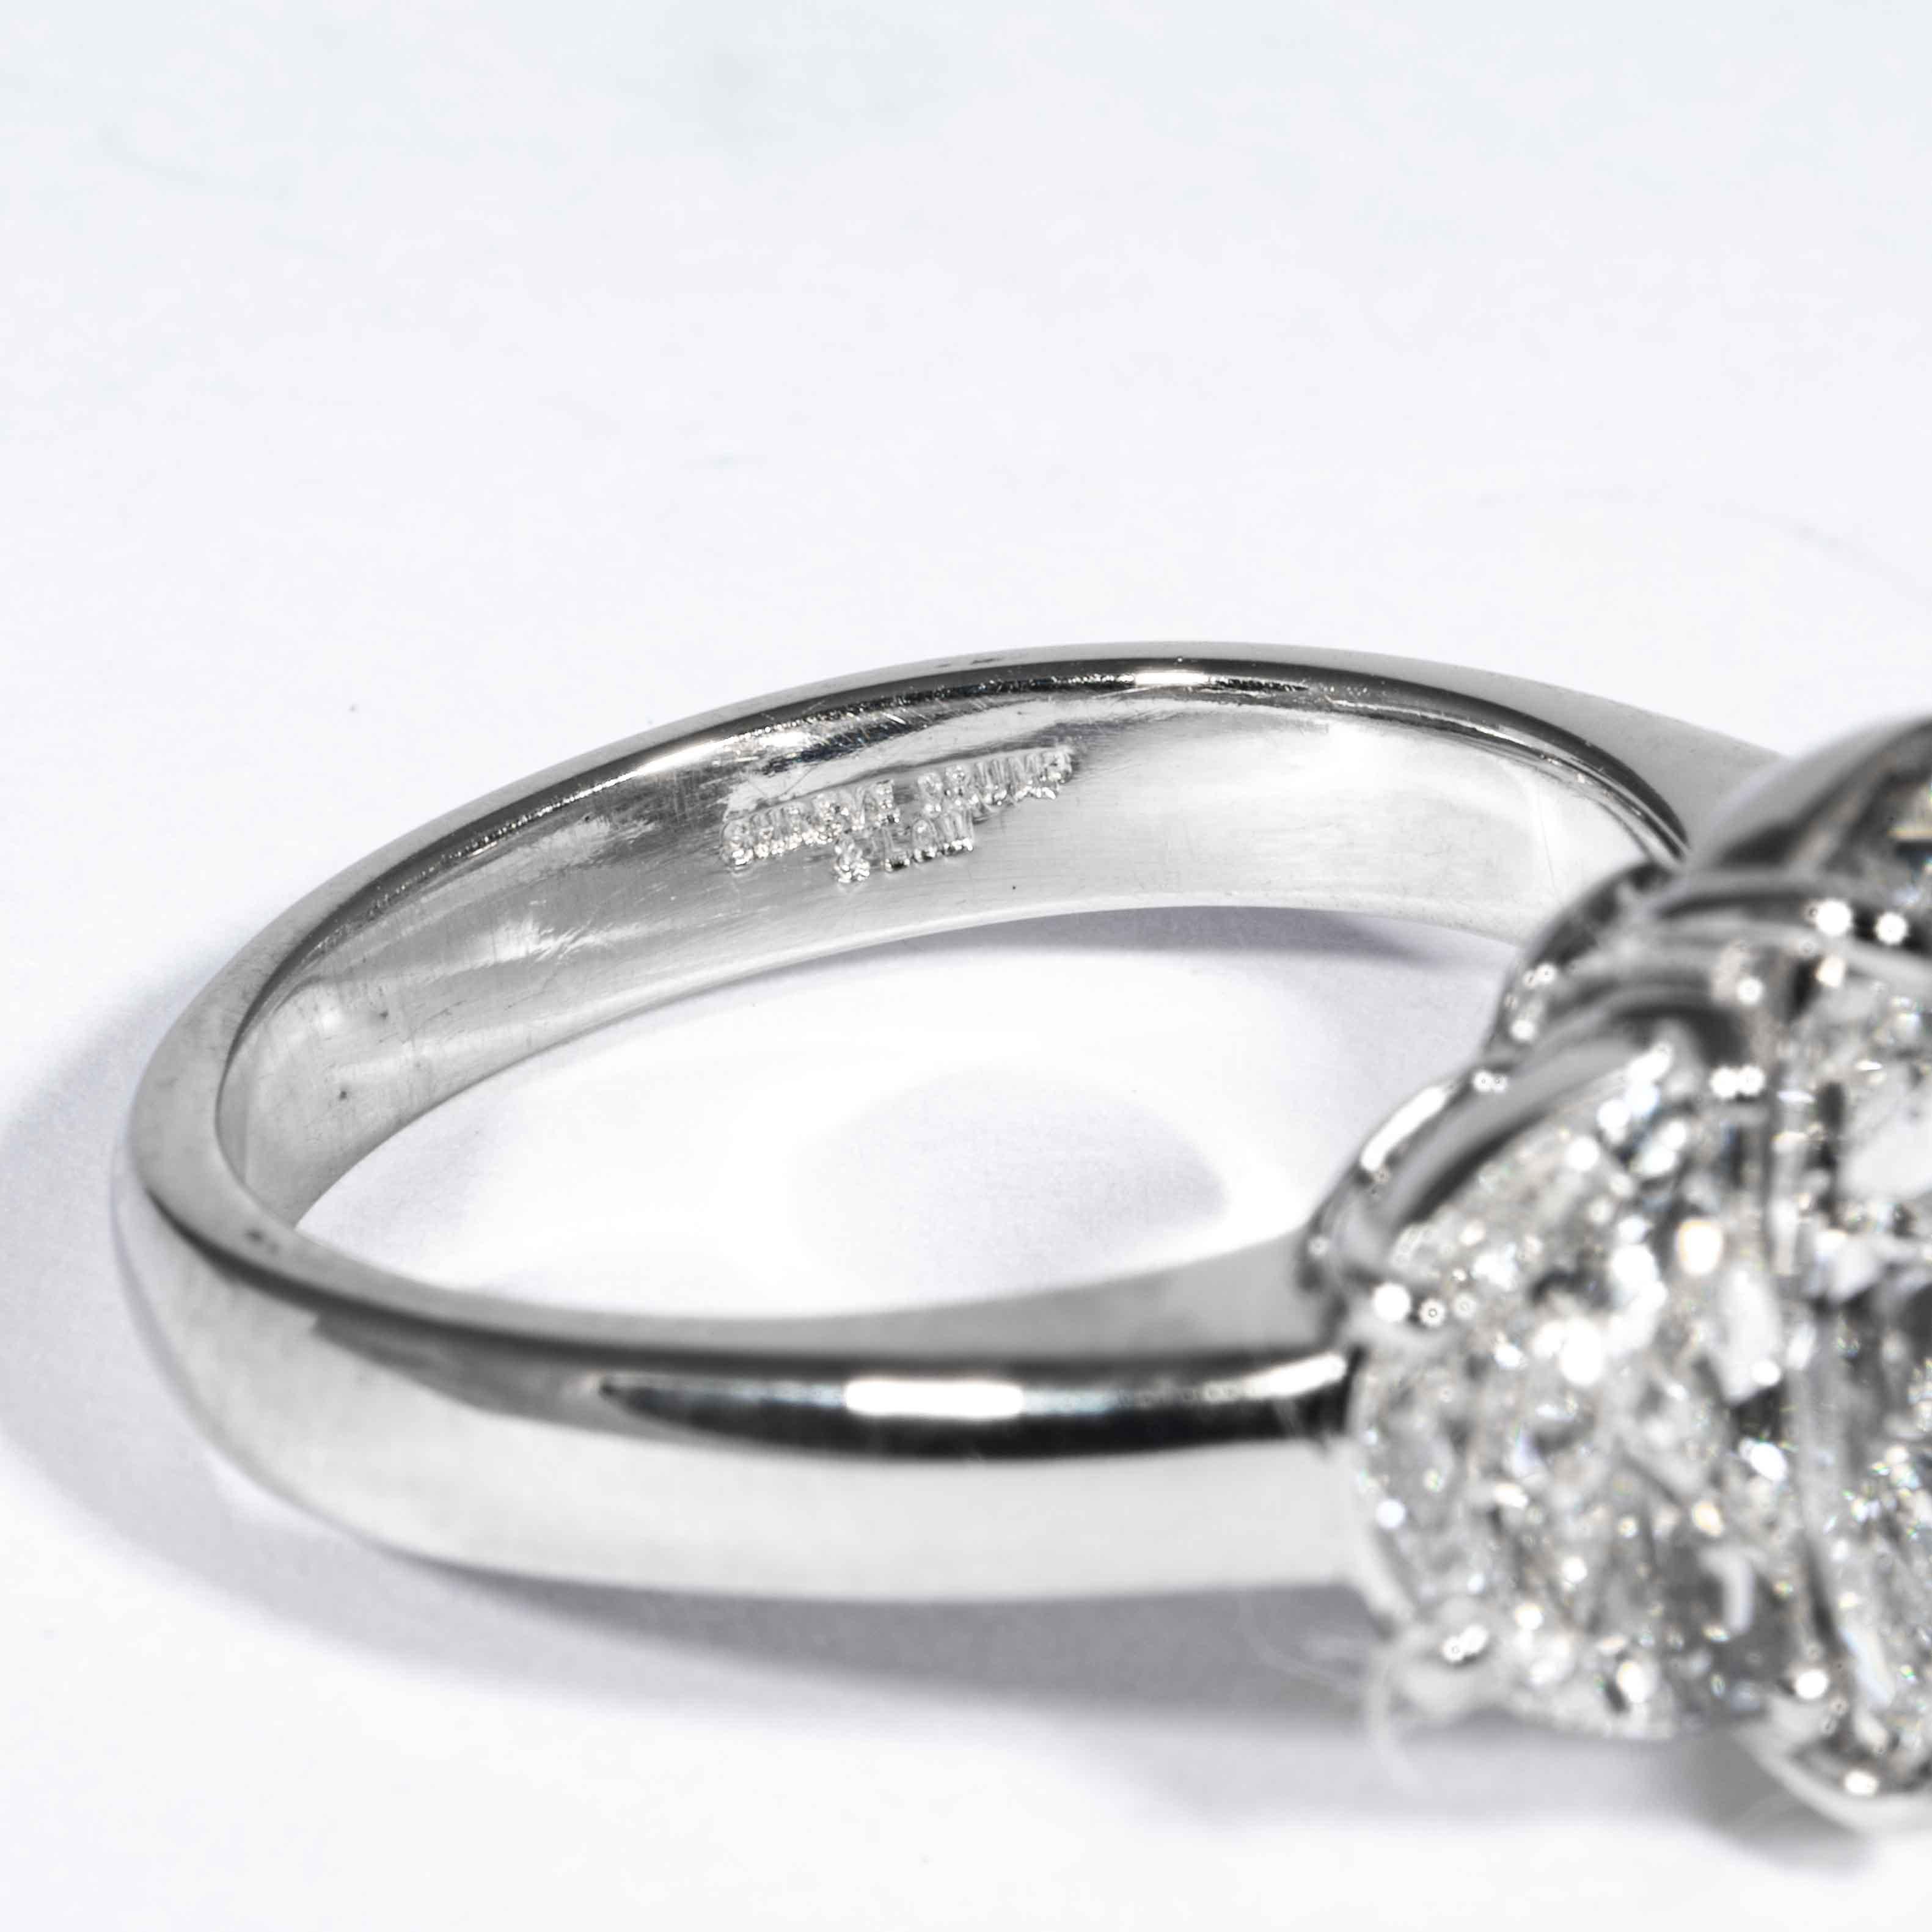 Shreve, Crump & Low GIA Certified 4.12 Carat G SI1 Oval Cut Diamond 3-Stone Ring 2